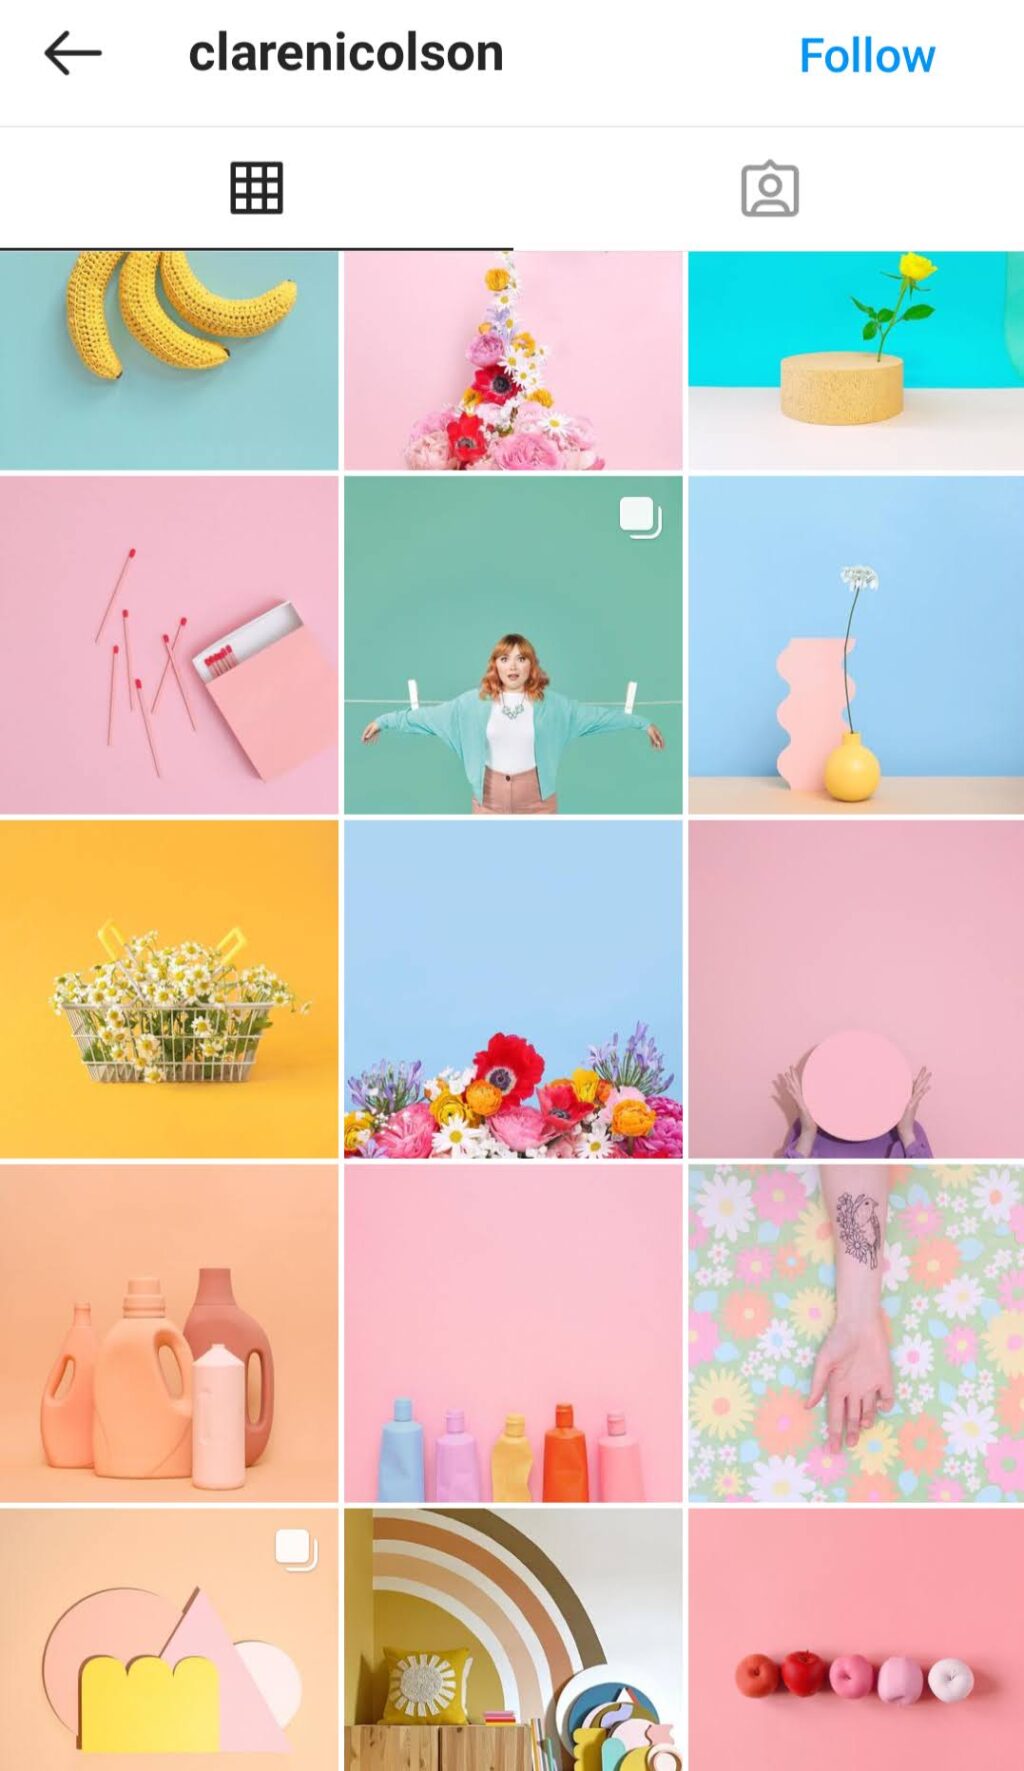 10 Creative Photo Grid Ideas for Instagram